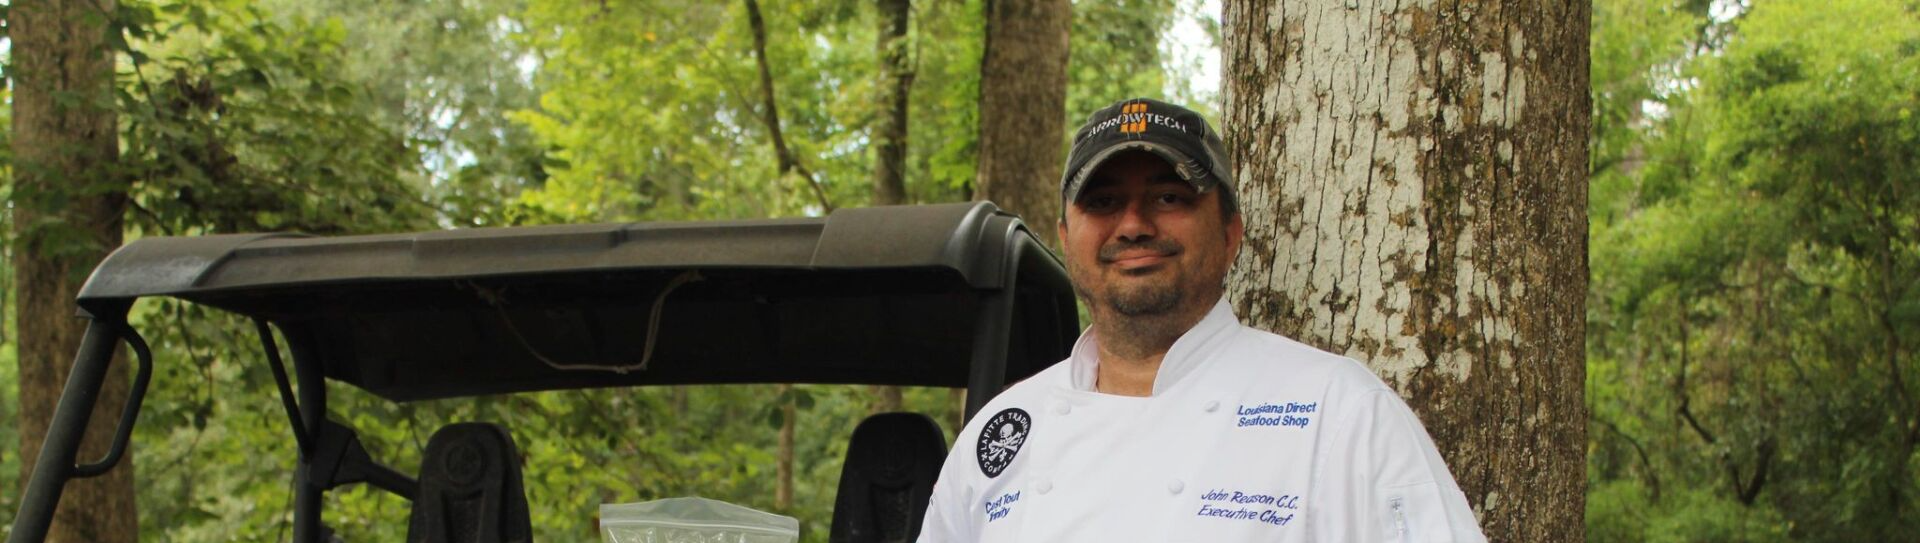 Louisiana Culinary Institute Alumni Spotlight: Chef John Reason